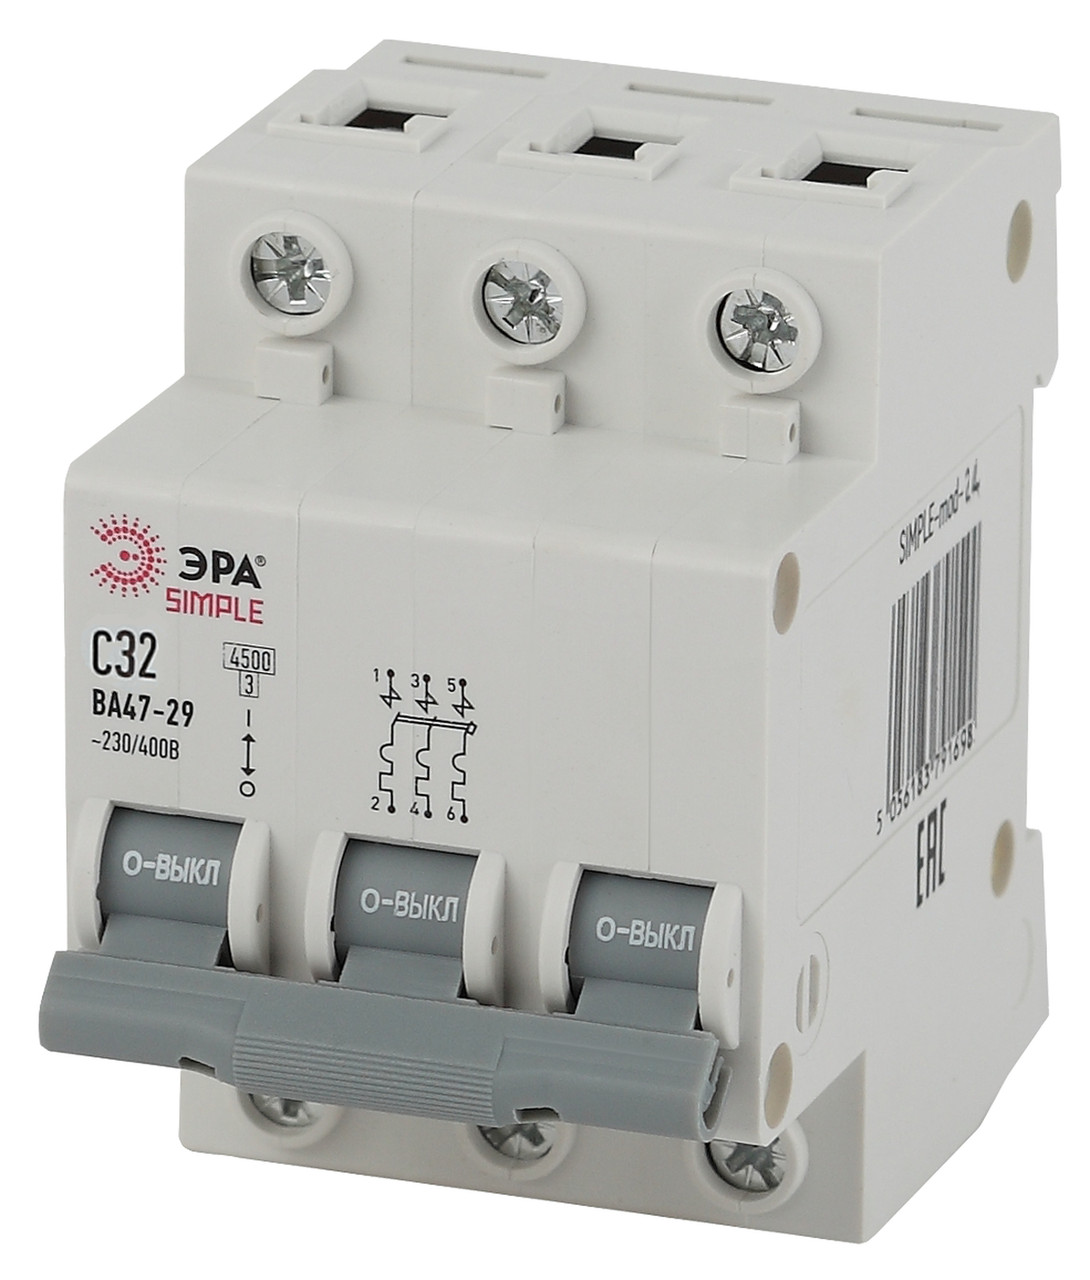 SIMPLE-mod-24 ЭРА SIMPLE Автоматический выключатель 3P 32А (C) 4,5кА ВА 47-29